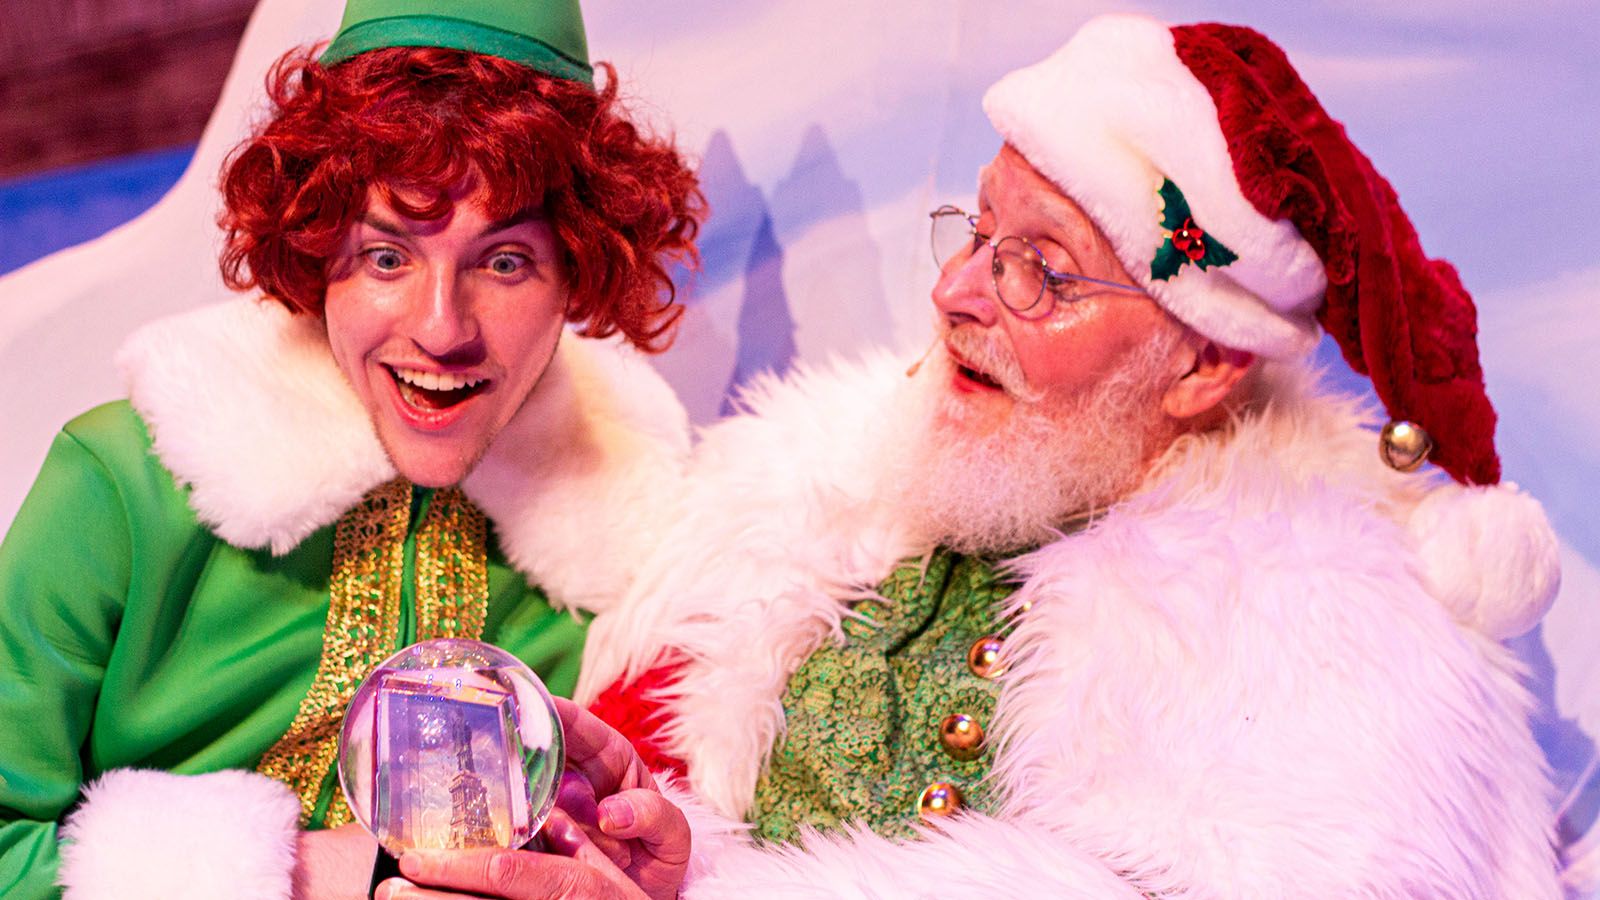 Civic Theatre's "Elf The Musical" continues at Arts United Center through Nov. 20.